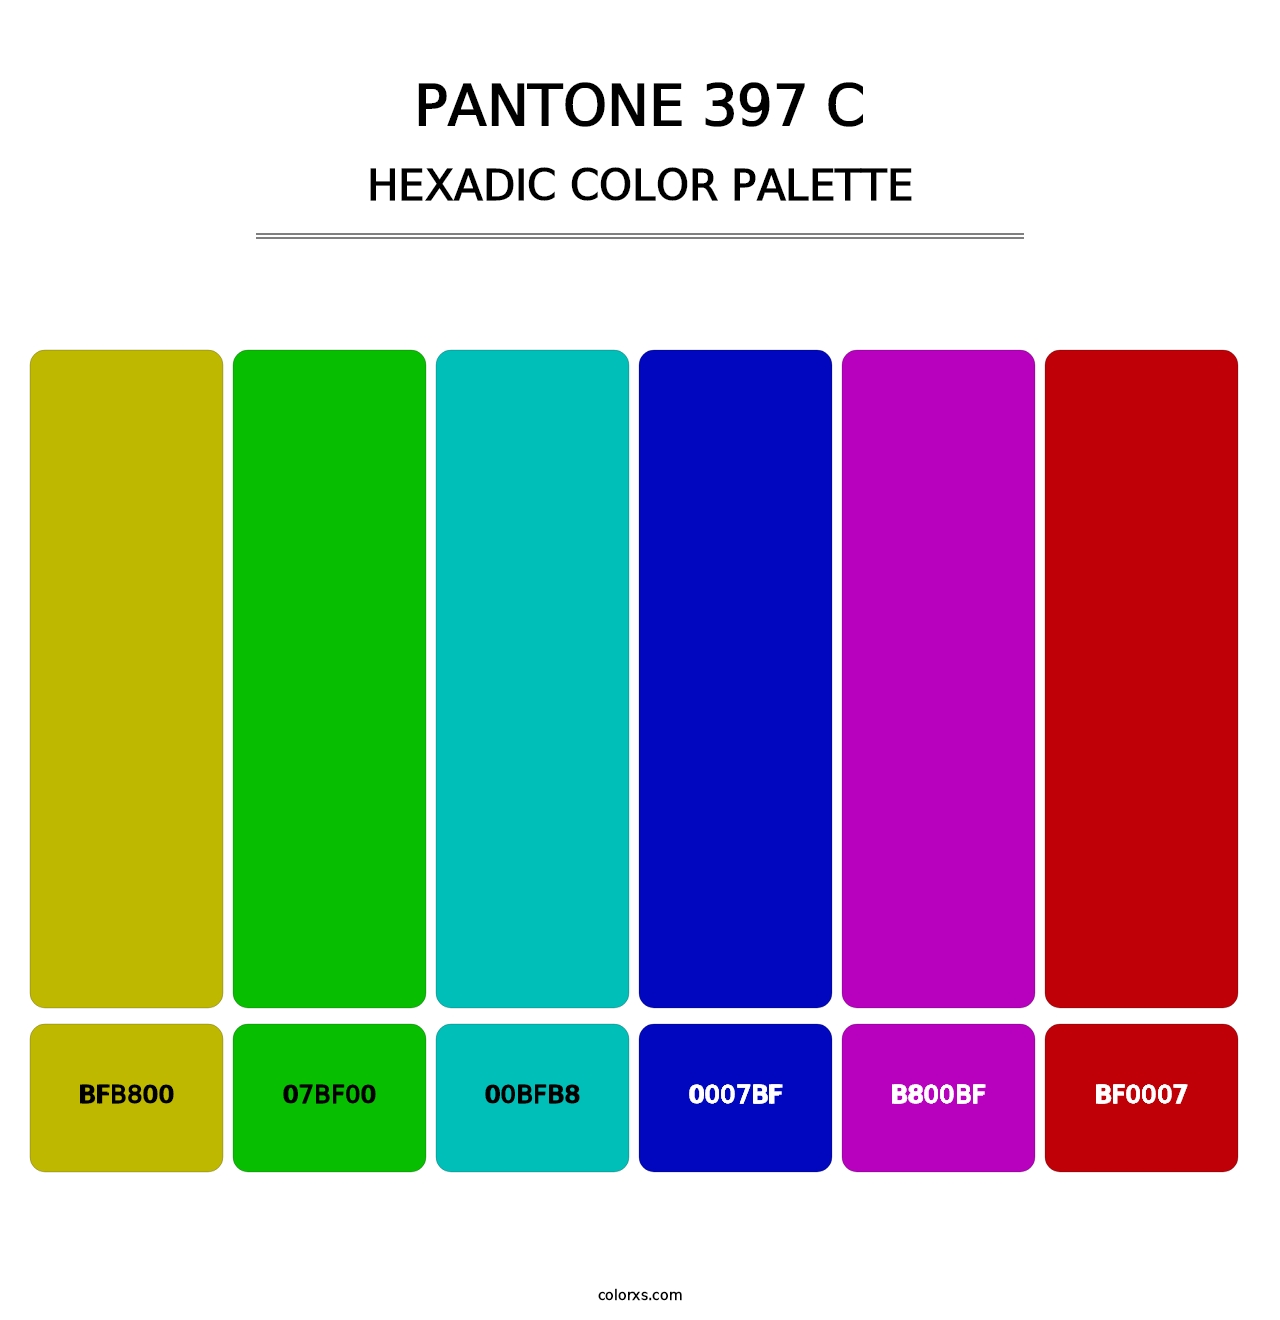 PANTONE 397 C - Hexadic Color Palette